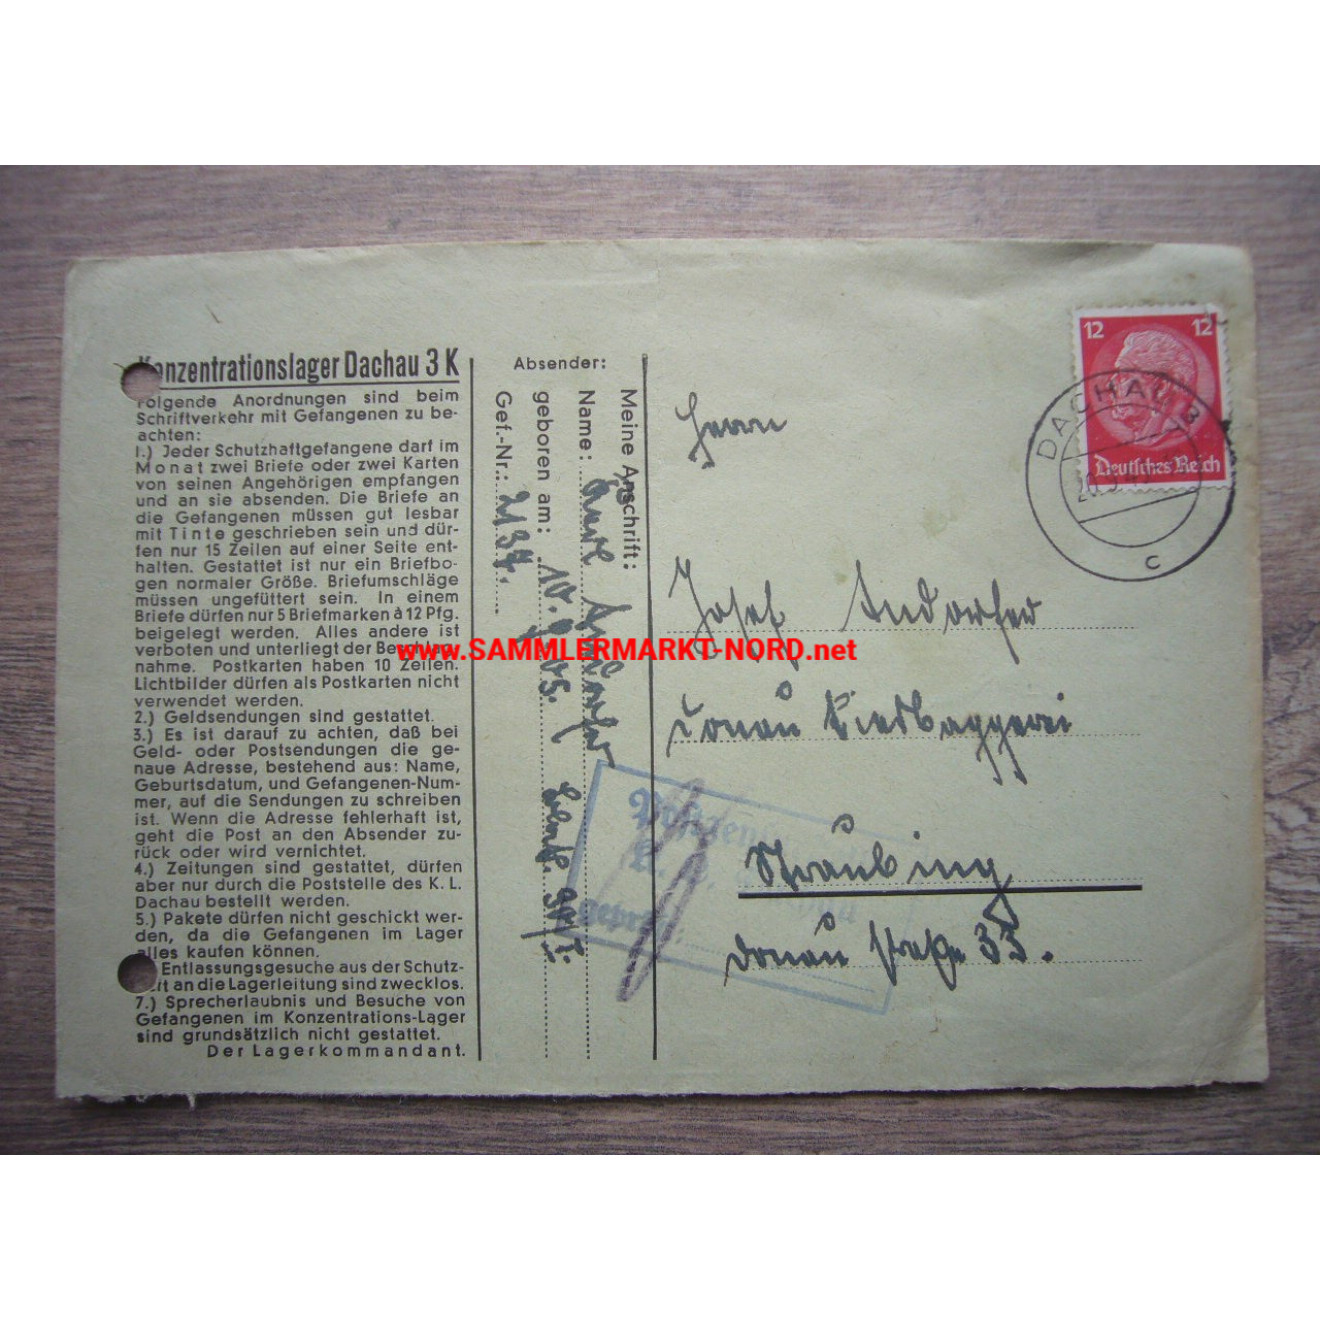 Dachau concentration camp 3 K - Envelope of a political prisoner - 1940